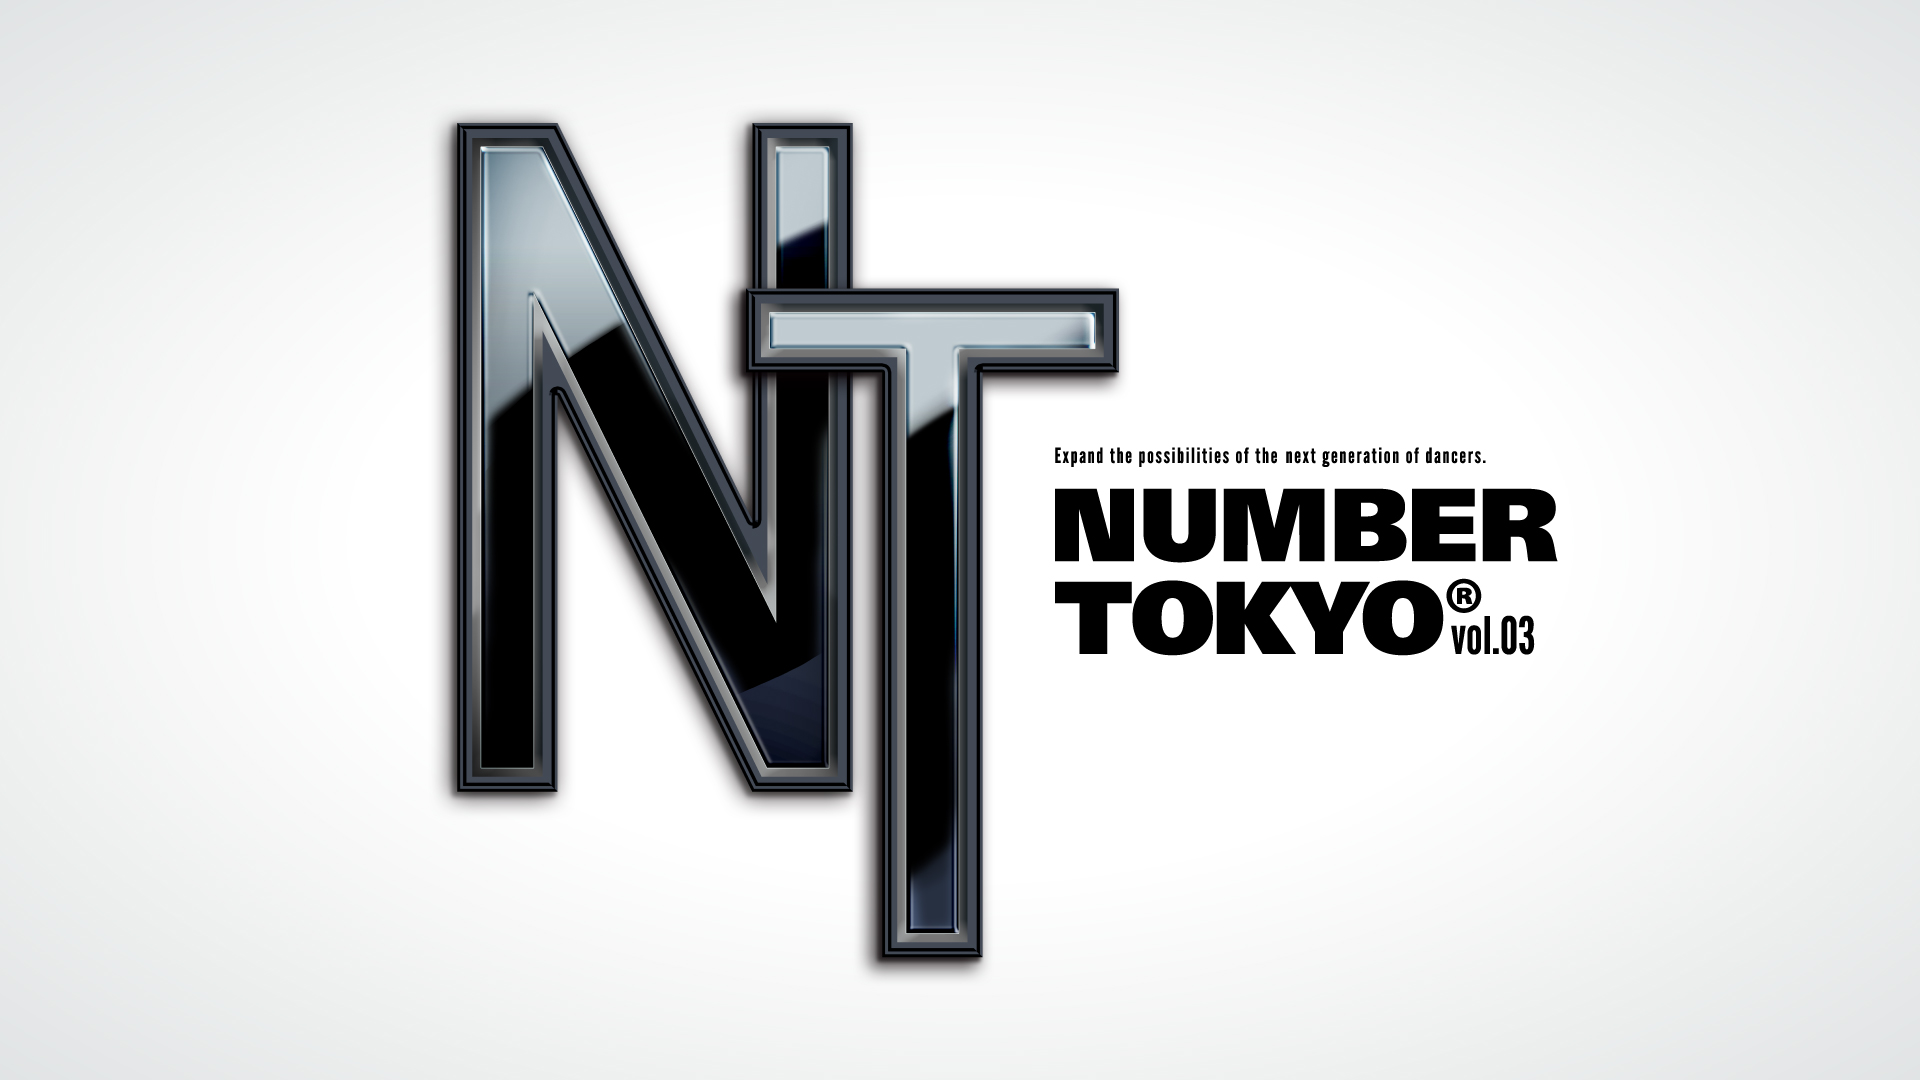 「NUMBER TOKYO® vol.3」開催決定のお知らせ